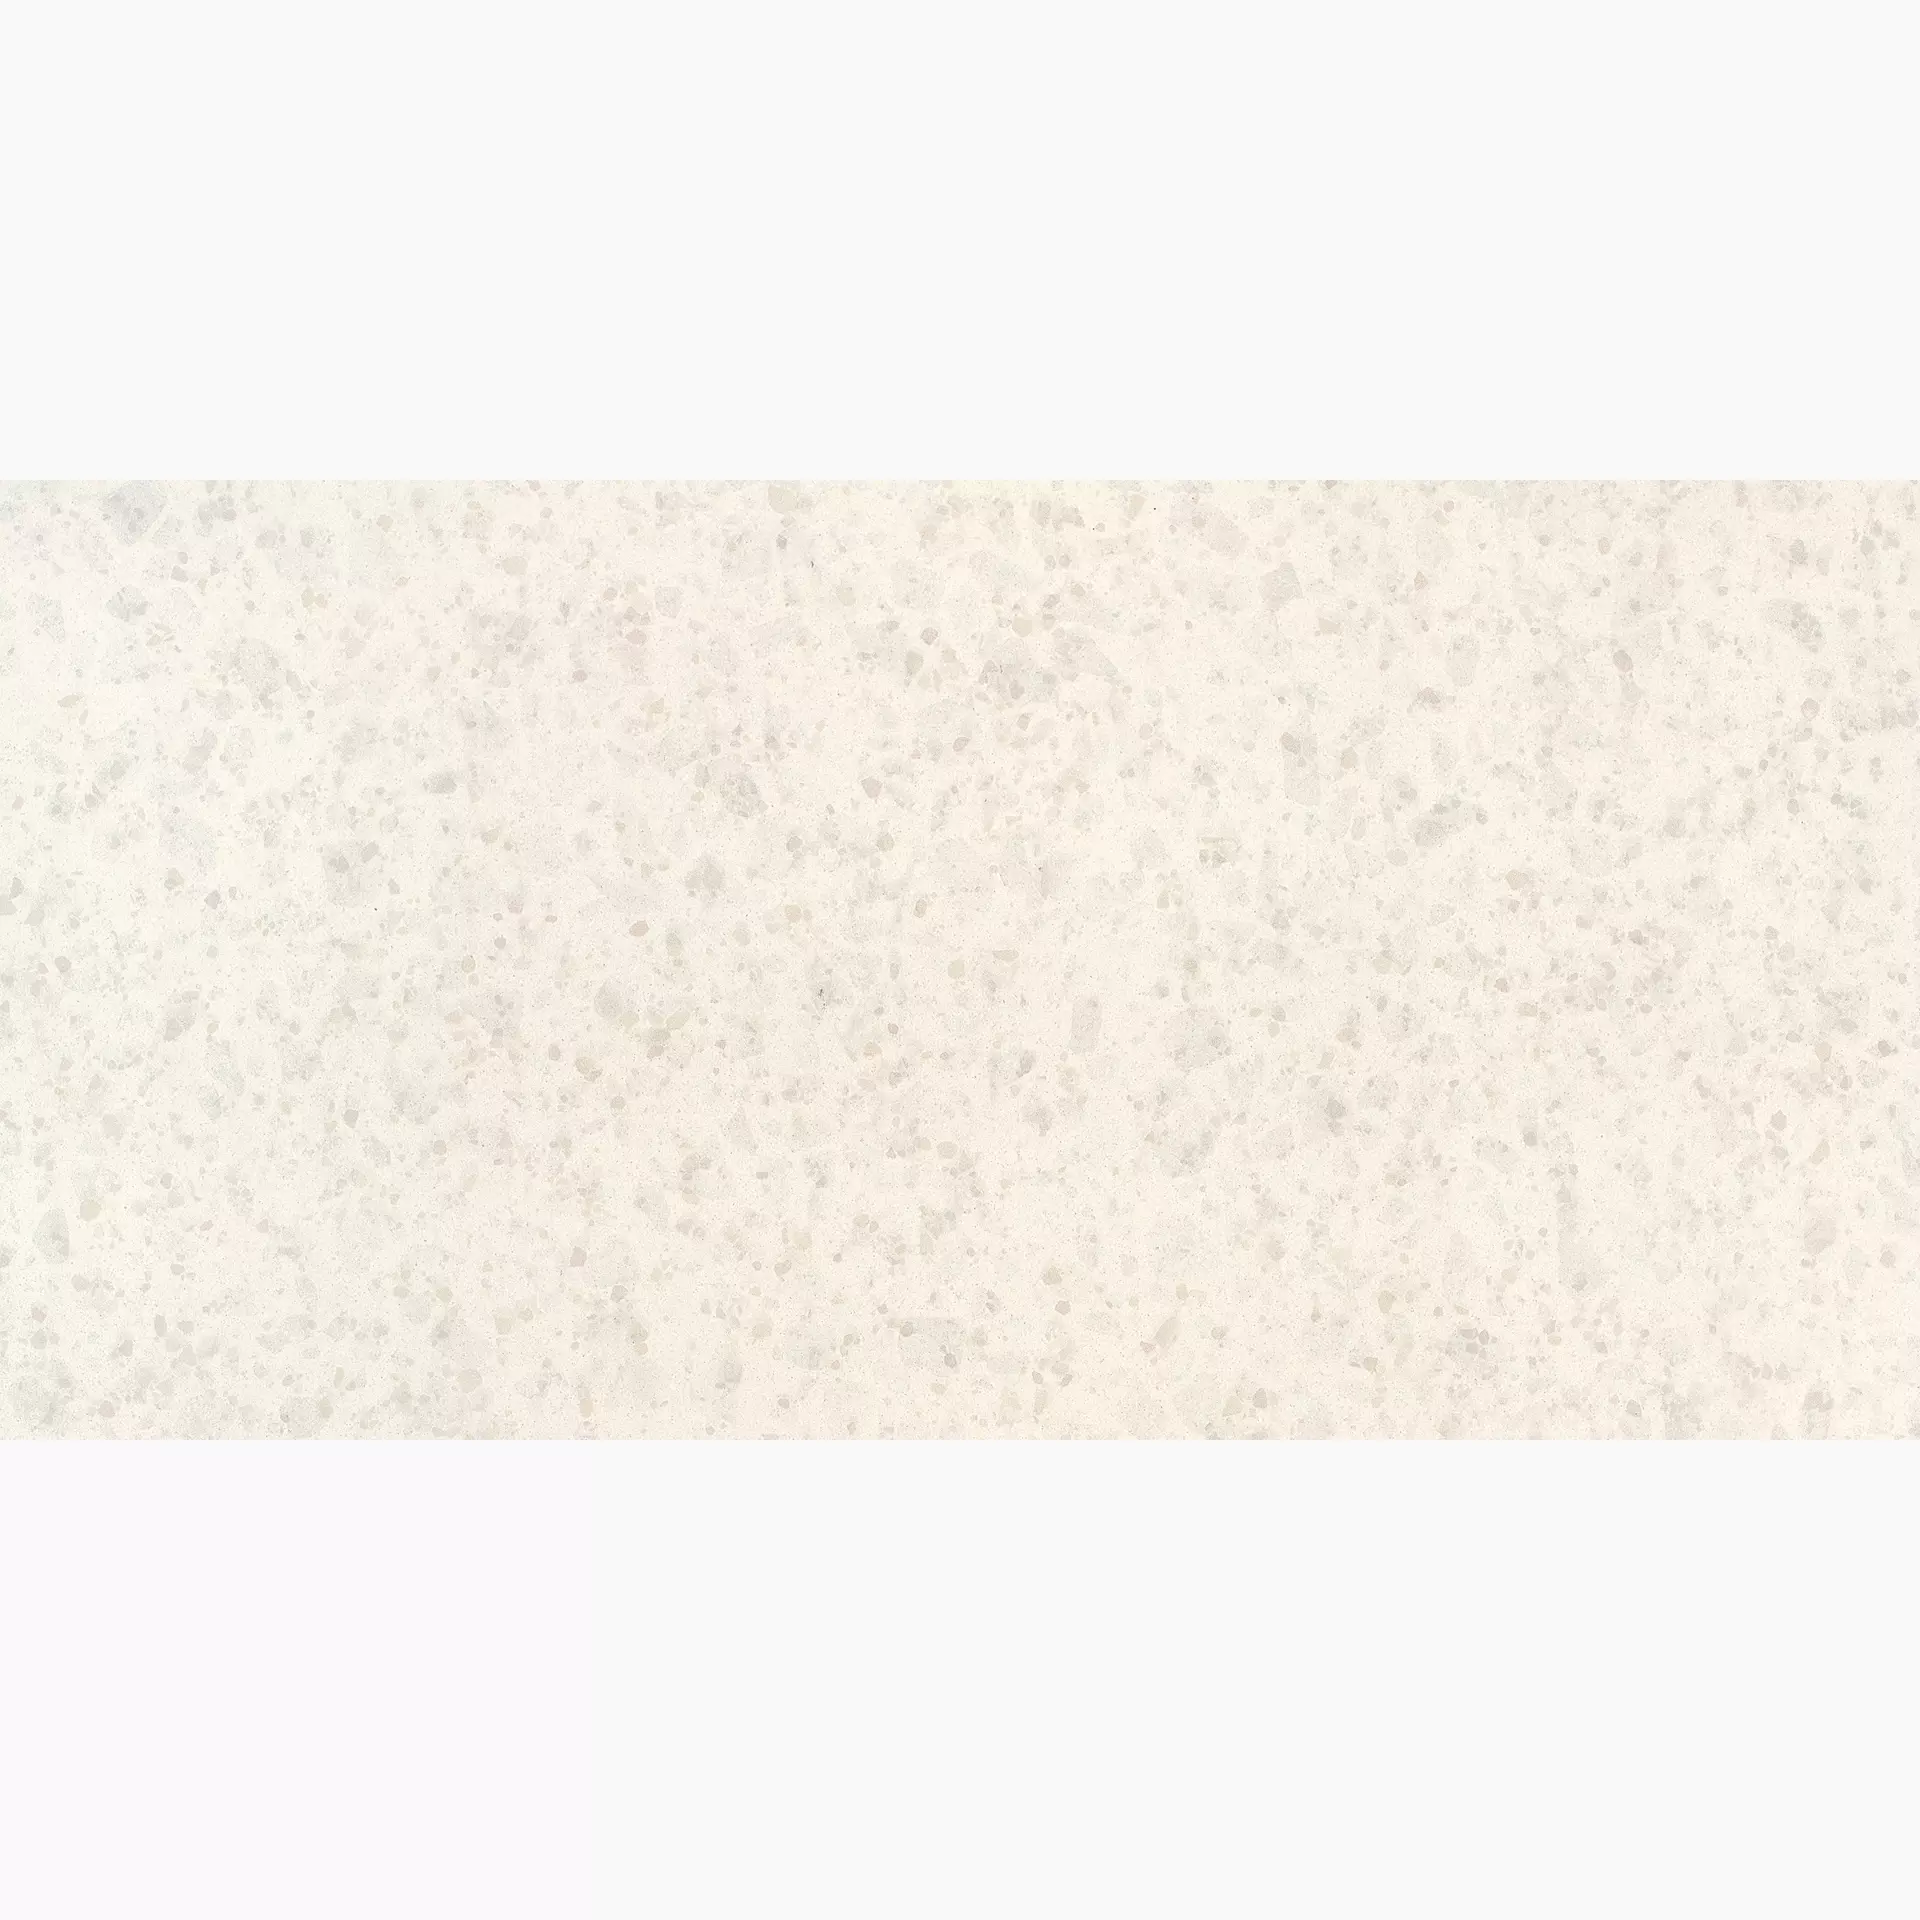 Gigacer Inclusioni Soave Bianco Perla Bocciardato 12INCL60120BIAPERBOC 60x120cm 12mm